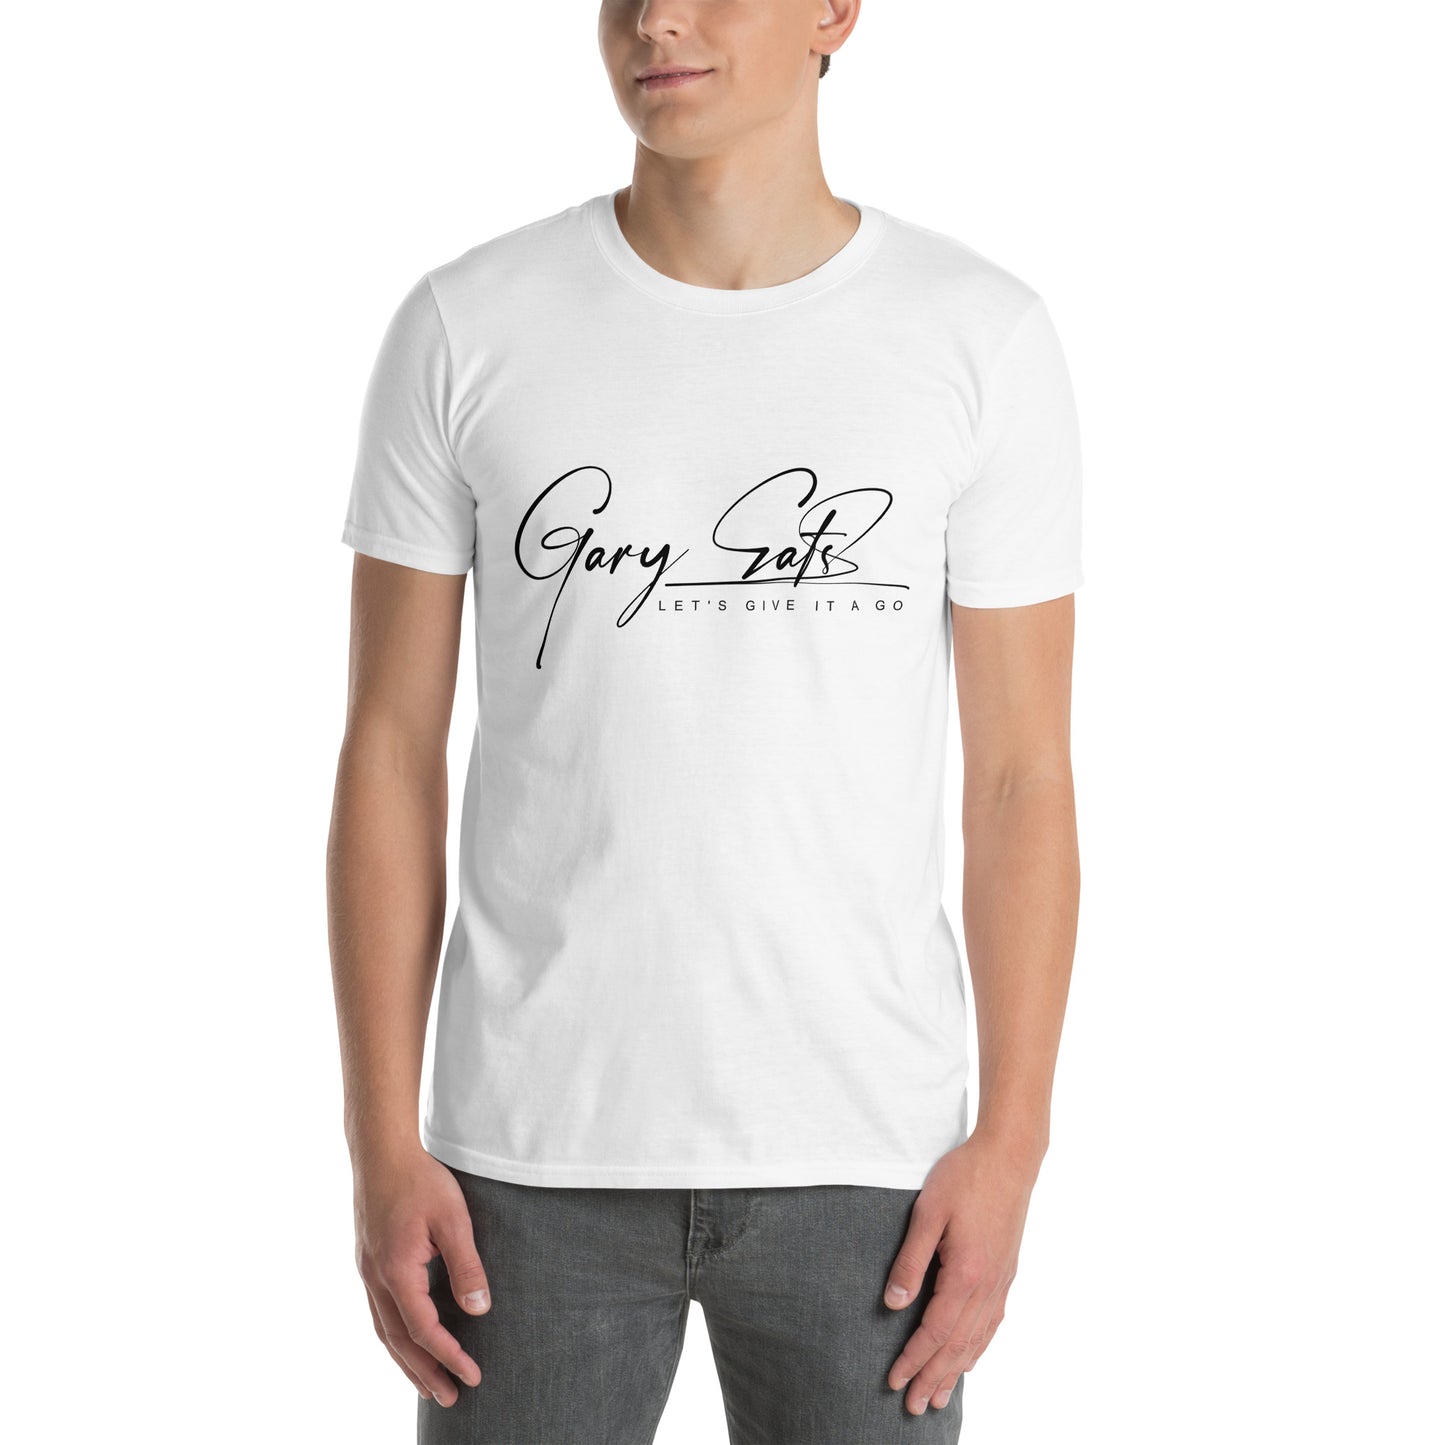 Gary Eats Signature Unisex T-Shirt